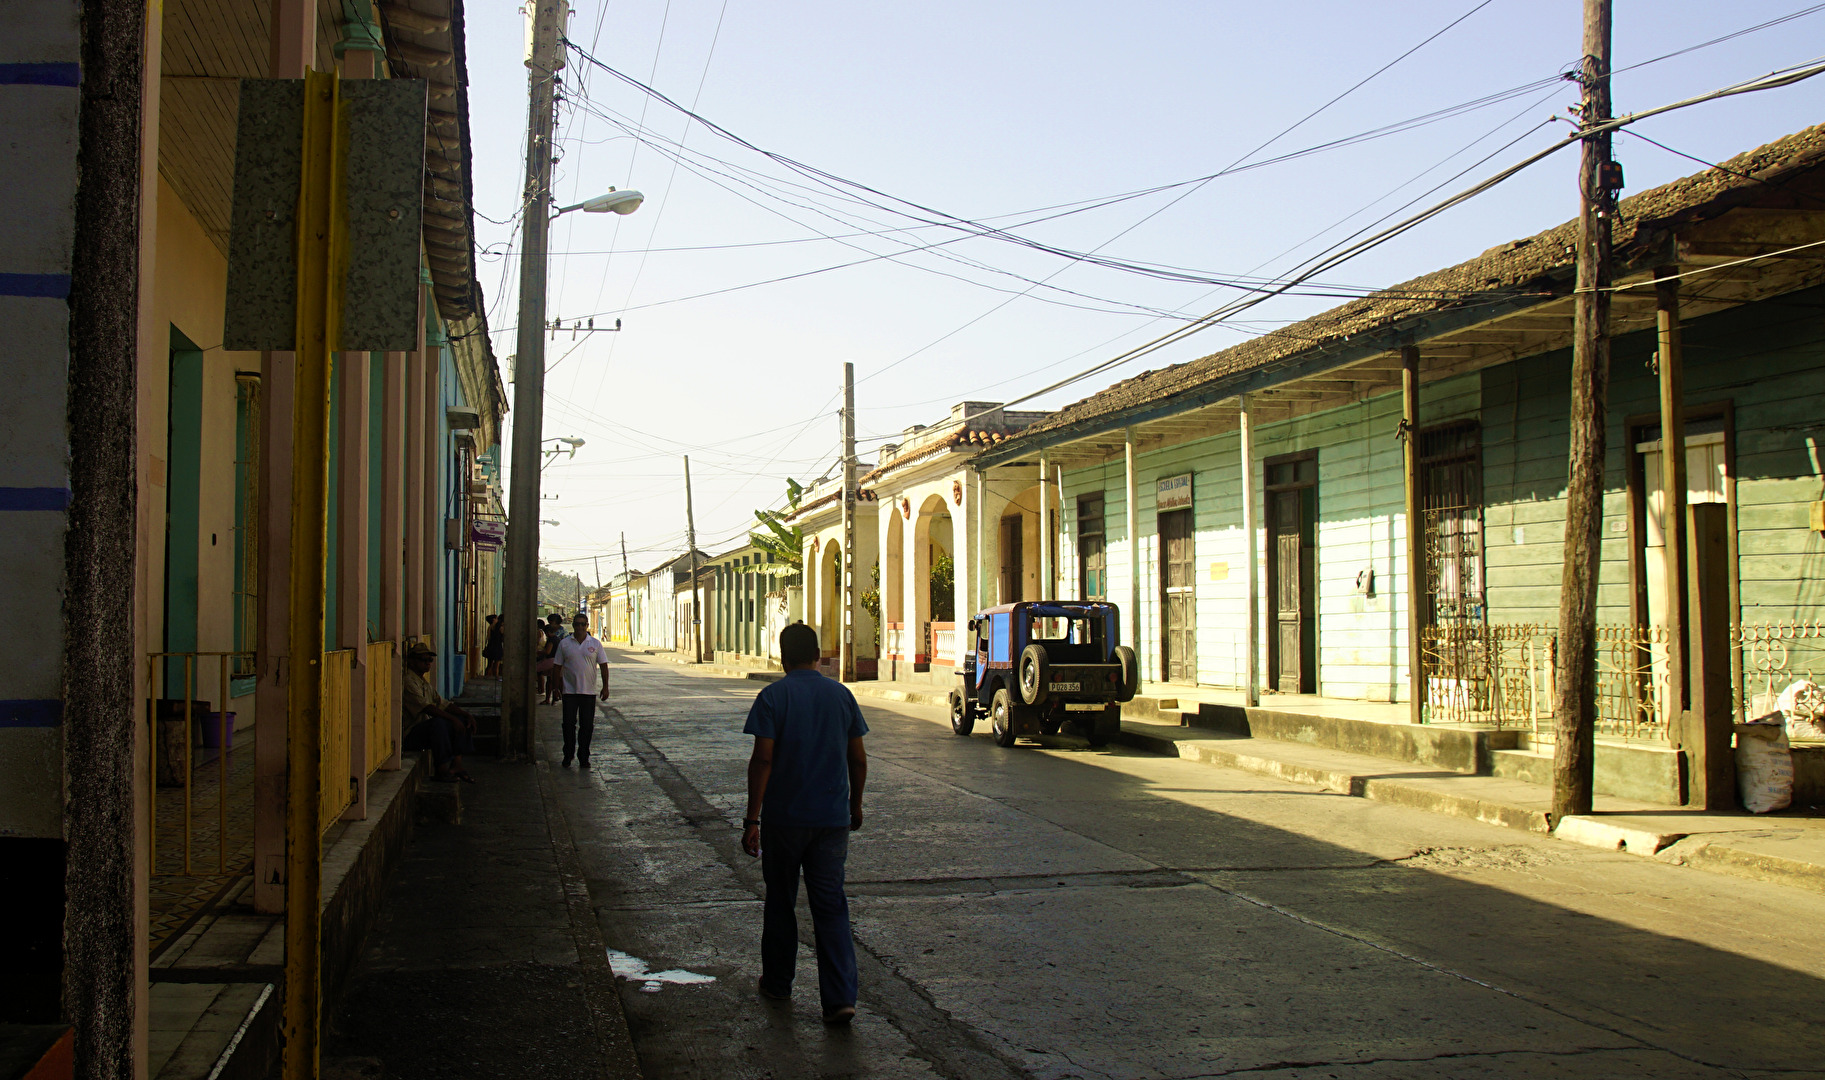 #Streetfotografie - High Noon in Baracoa